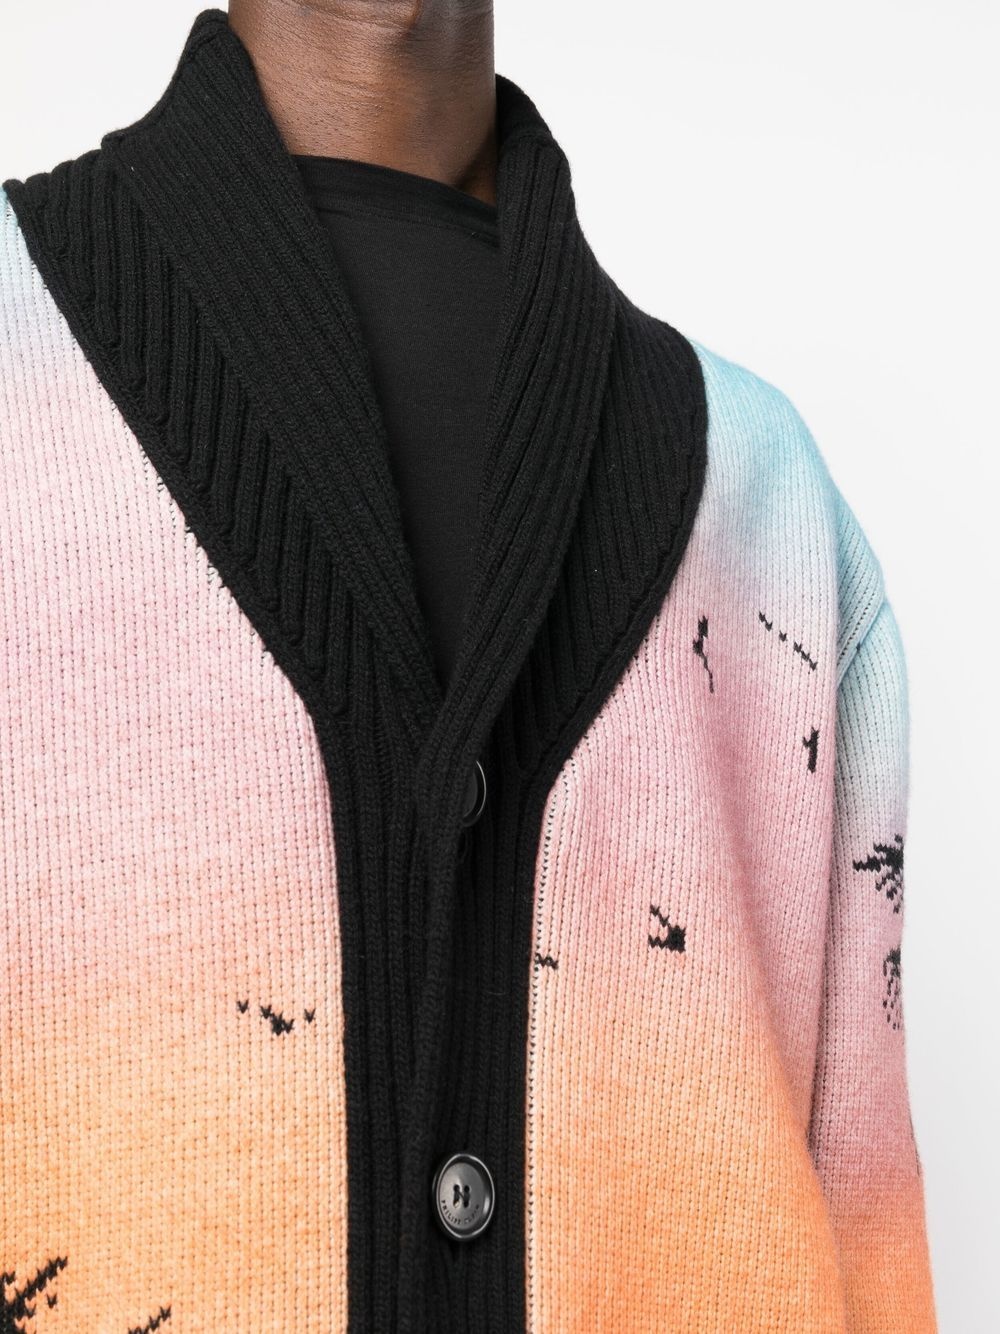 Philipp Plein tie-dye print wool jumper - Black